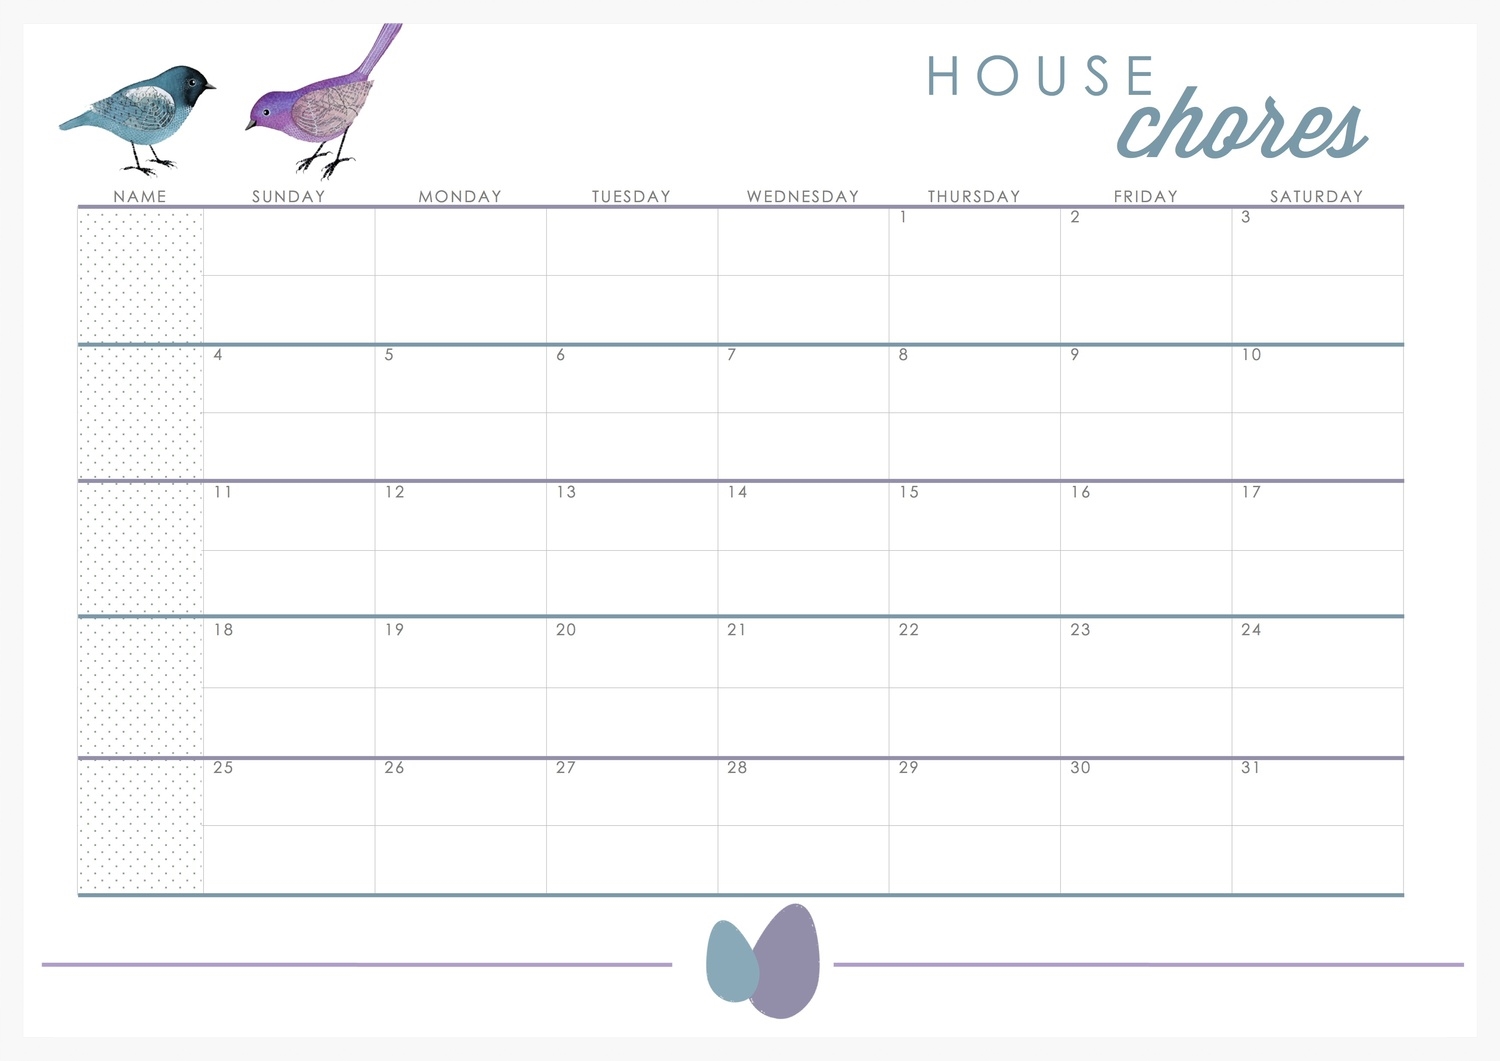 2014-05 - House Chores.jpg